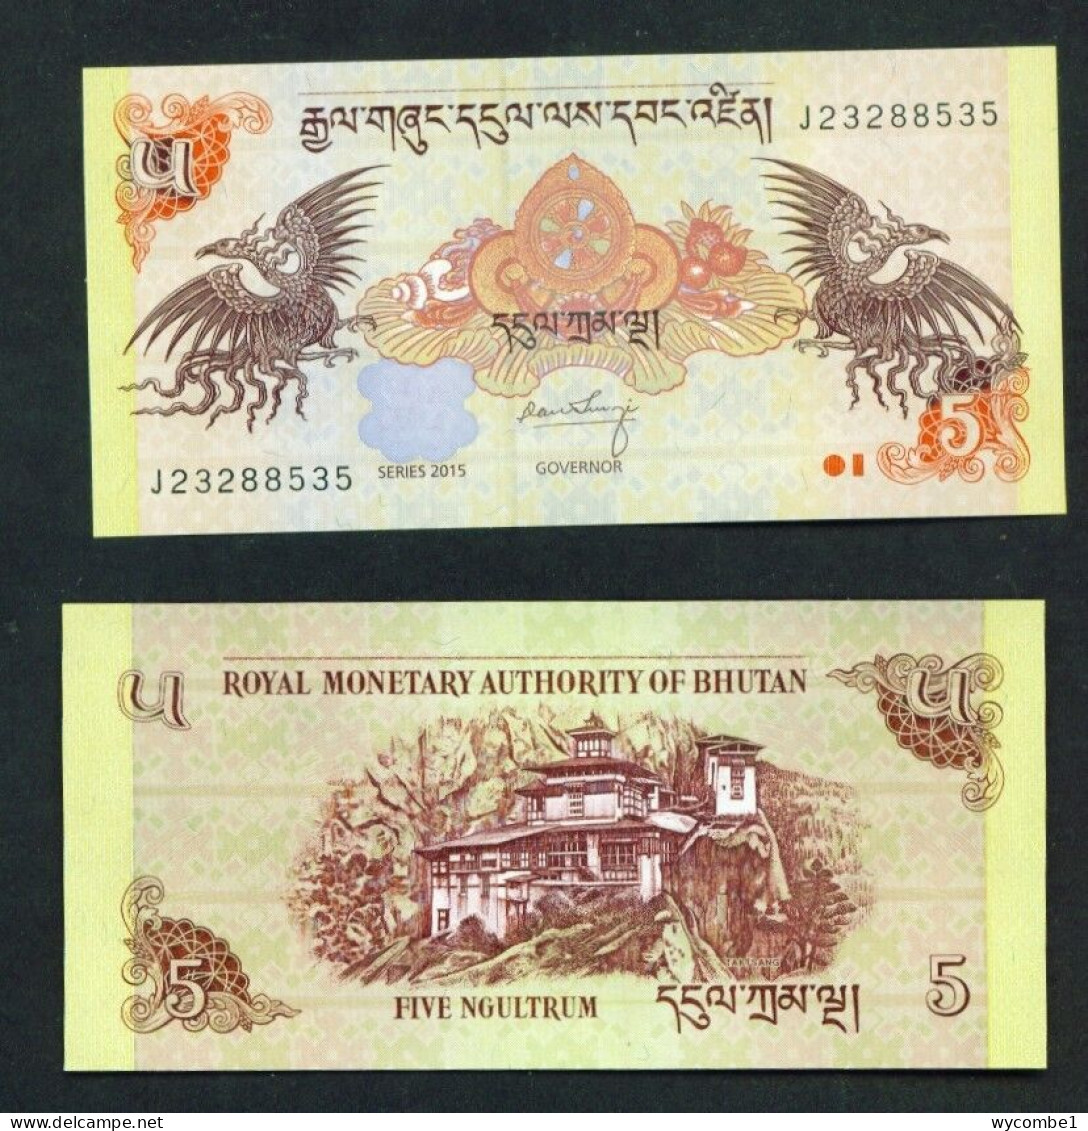 BHUTAN  -  2015  5 Ngultrum  UNC  Banknote - Bhutan